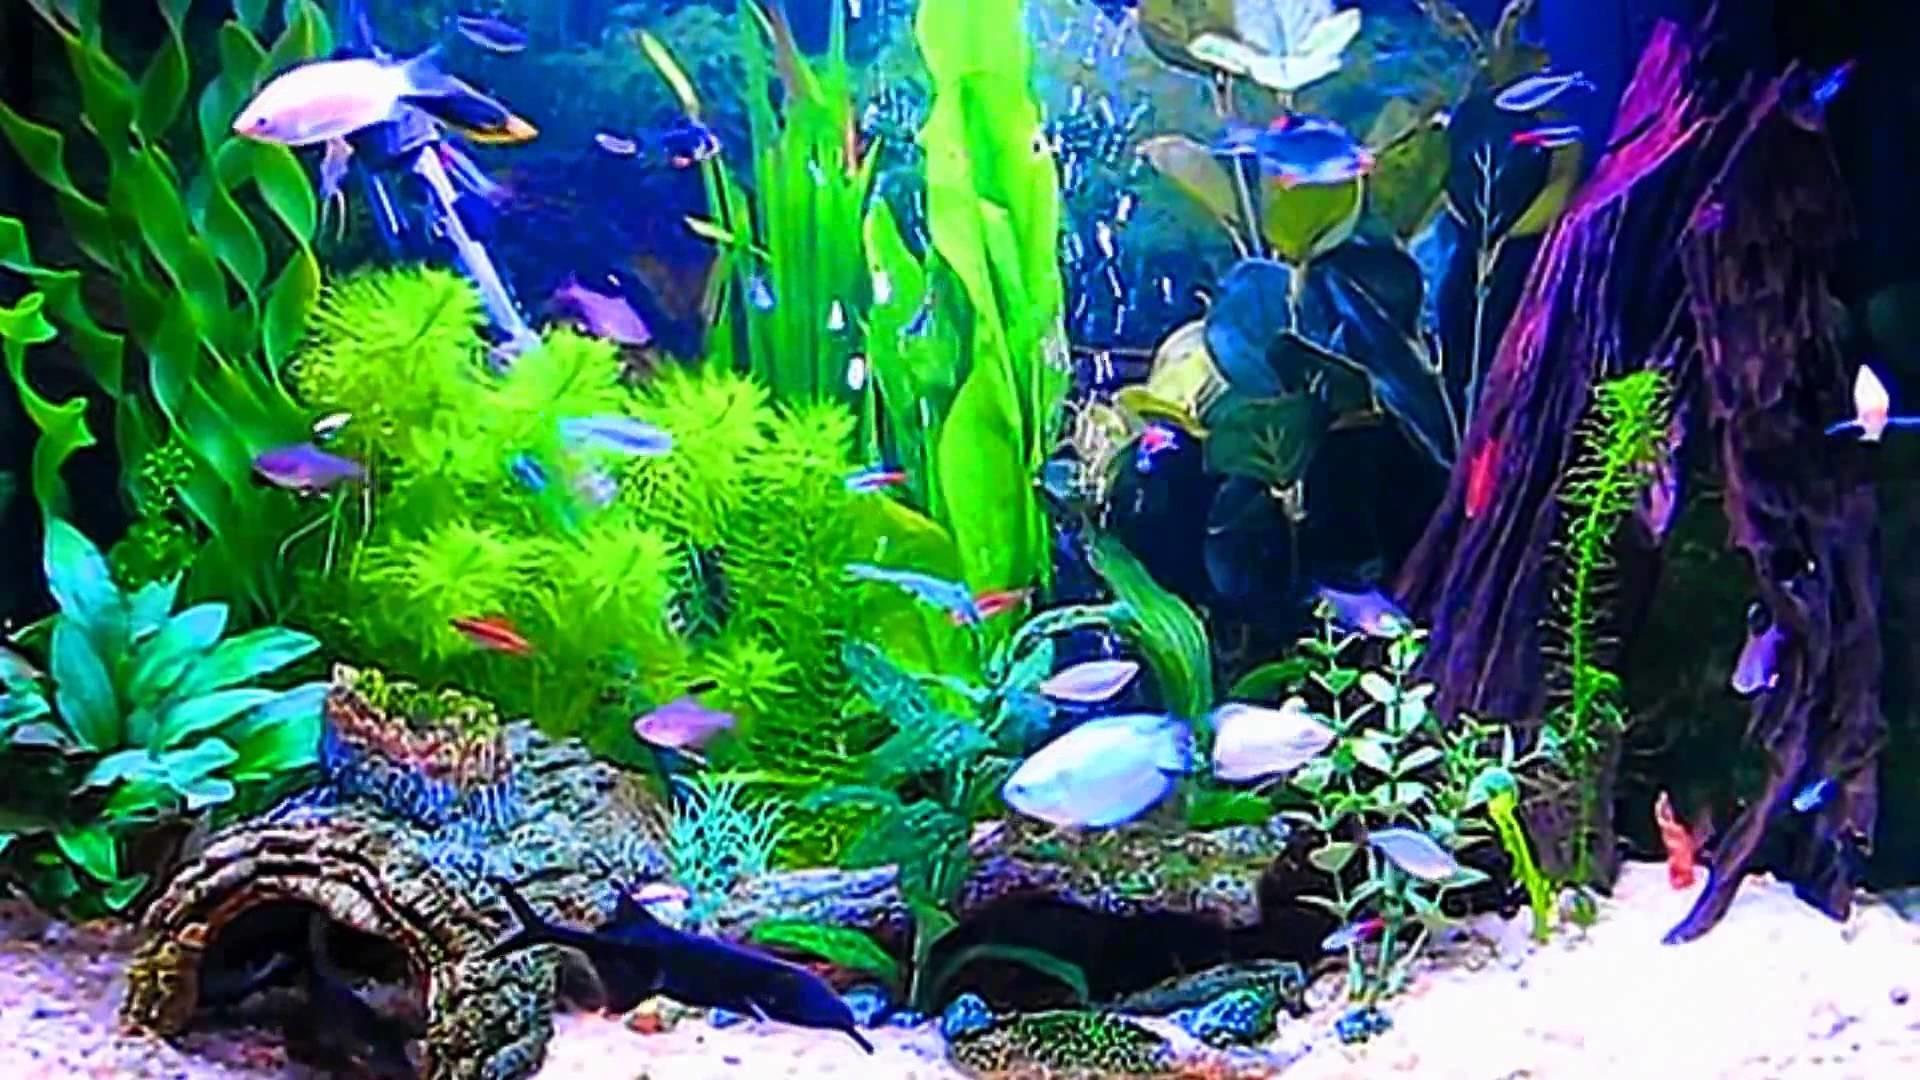 500 Freshwater Aquarium Wallpapers  Background Beautiful Best Available  For Download Freshwater Aquarium Images Free On Zicxacomphotos  Zicxa  Photos